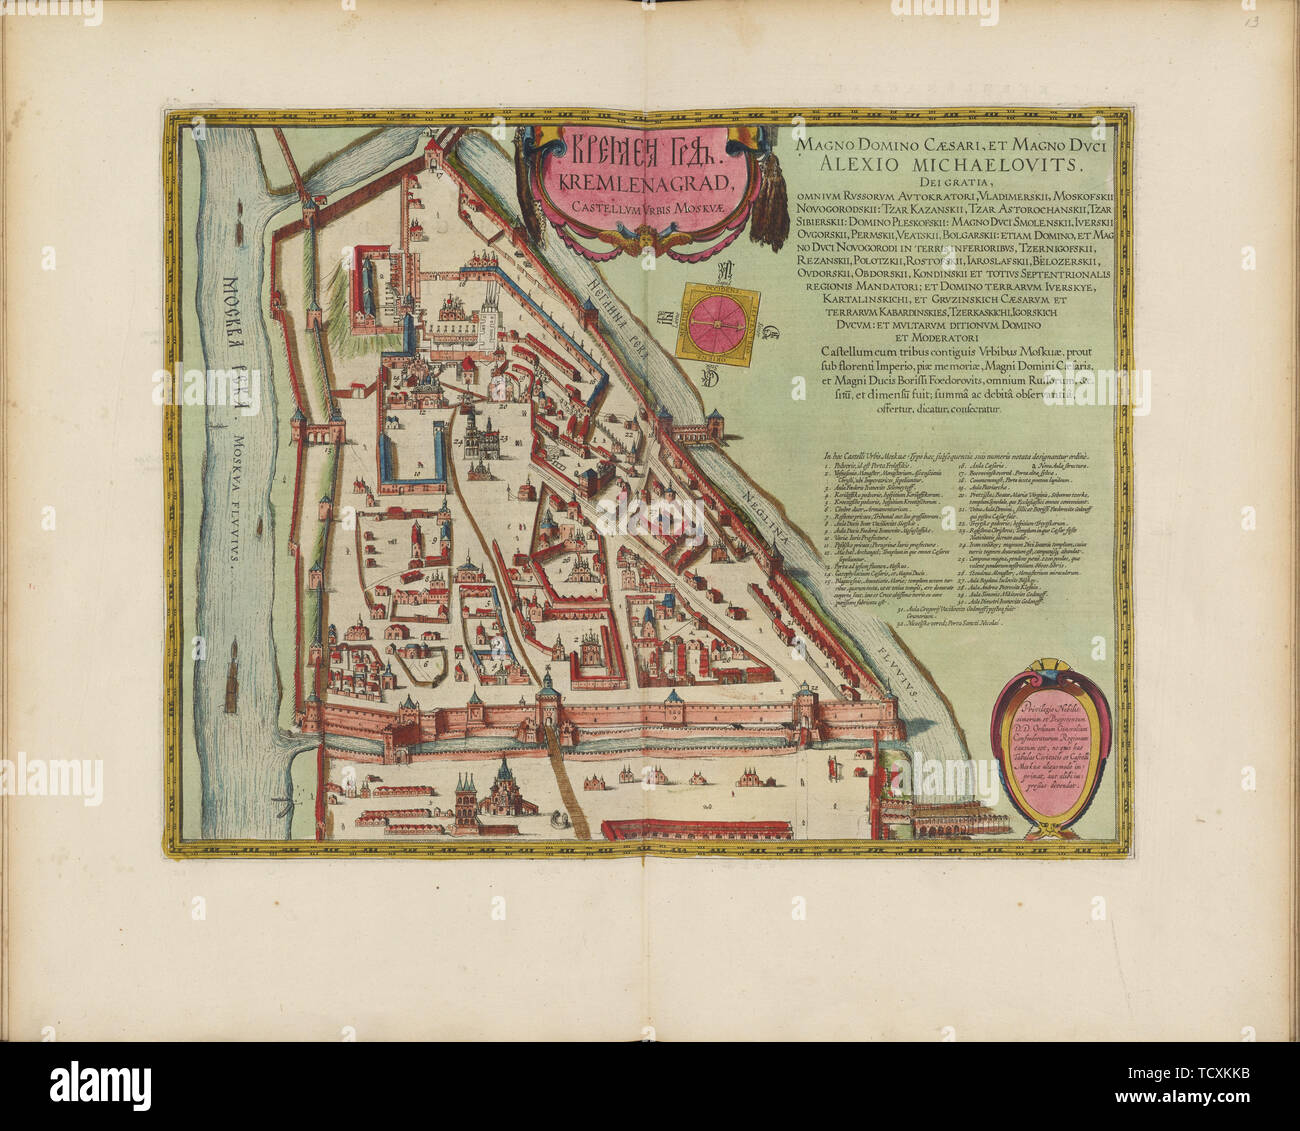 The Moscow Kremlin Map of the 16th century (Castellum Urbis Moskvae), ca. 1600. Creator: Blaeu, Joan (1596-1673). Stock Photo